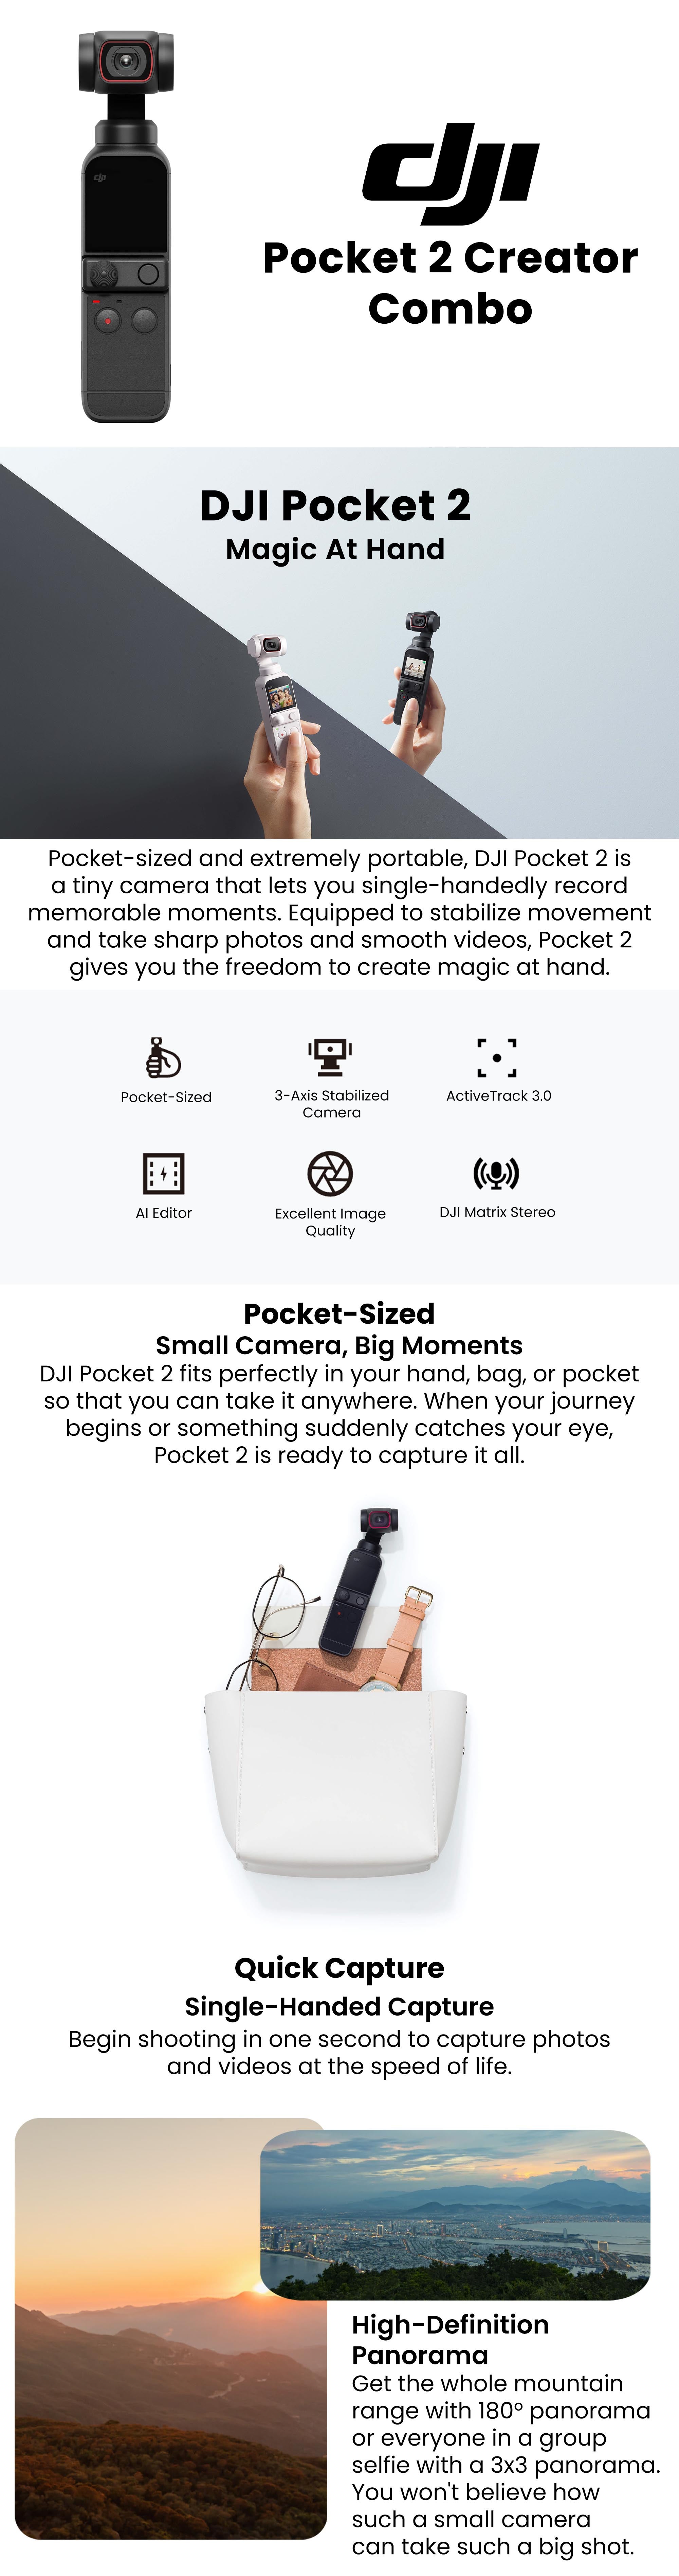 DJI Pocket 2 Creator Combo Reviews